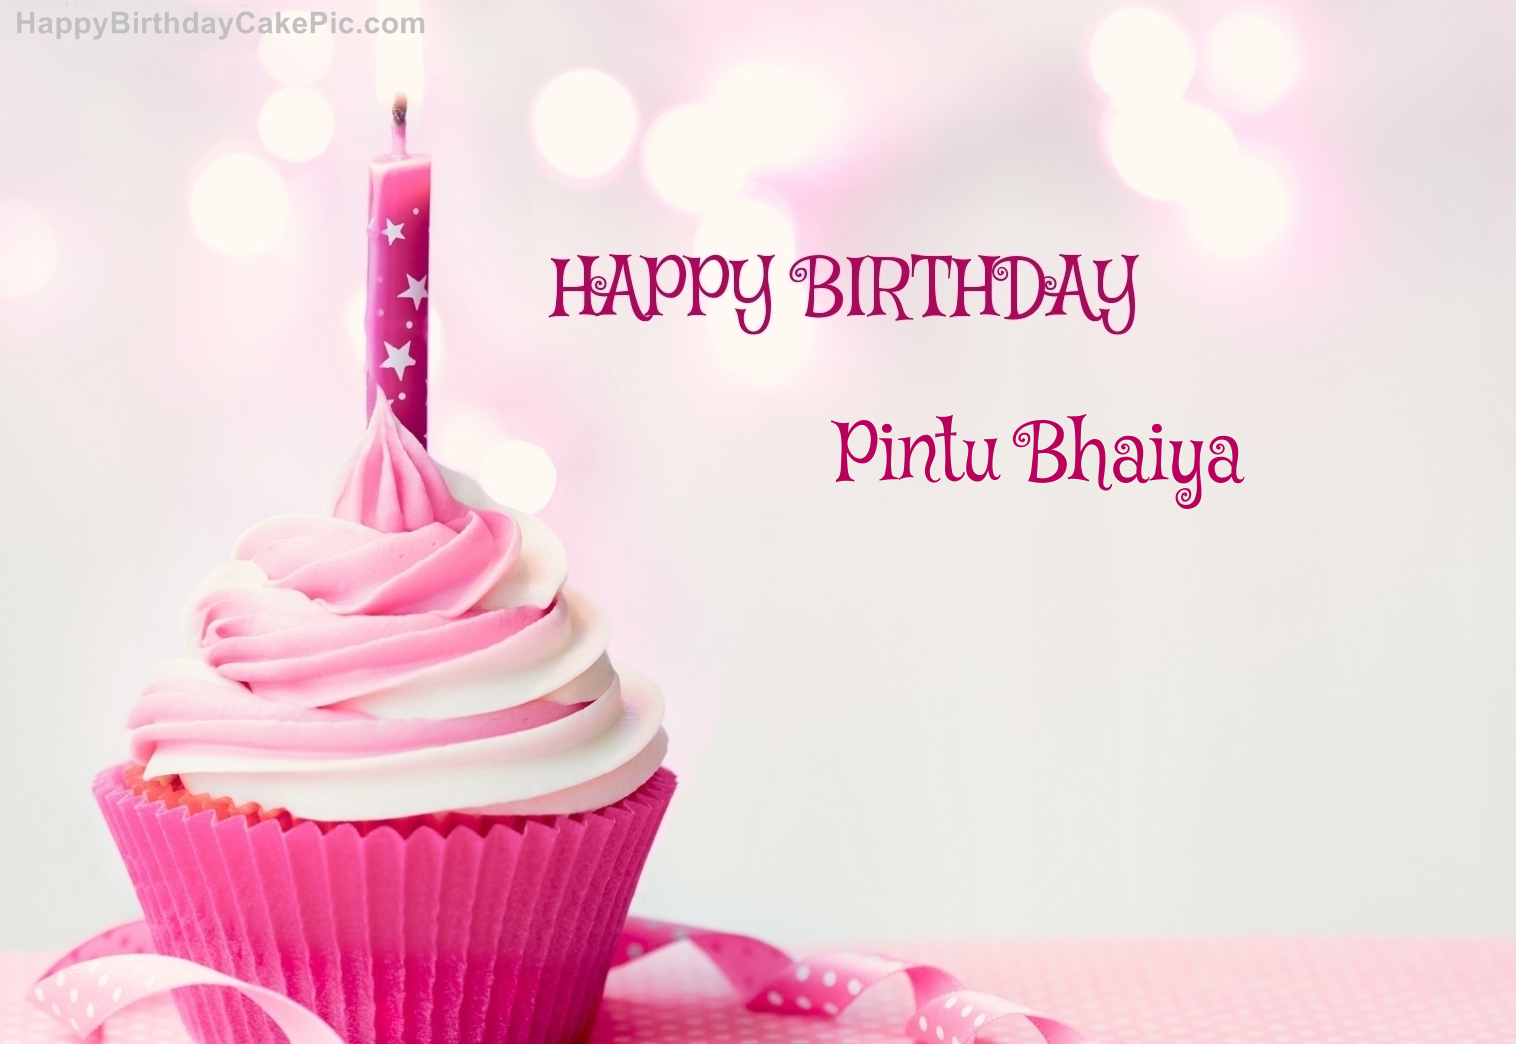 ️ Happy Birthday Cupcake Candle Pink Cake For Pintu Bhaiya